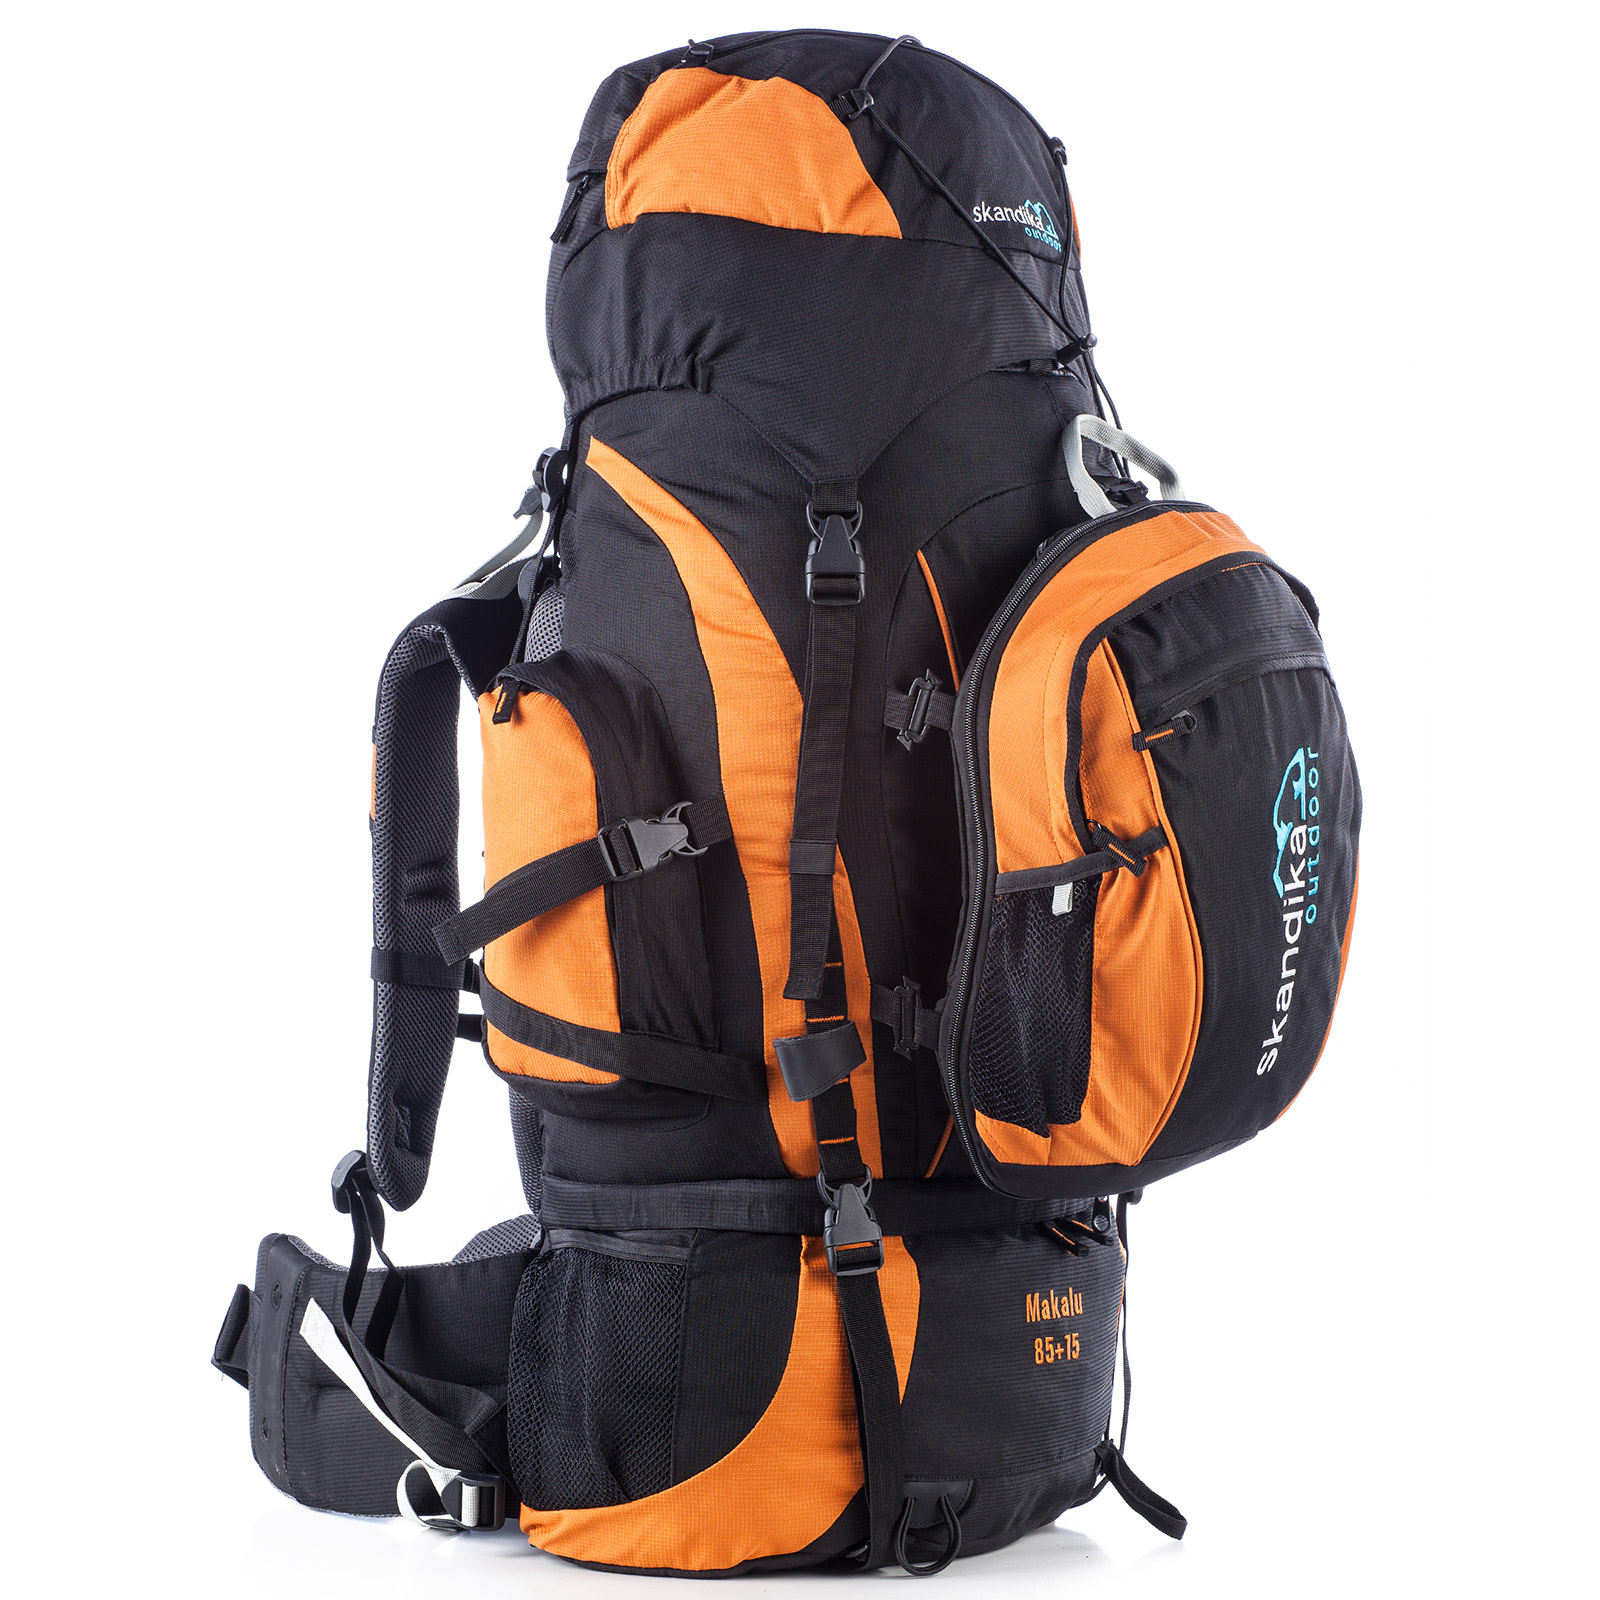 Skandika Trekking Hiking Rucksack Backpack 5 Models 65-100 Litre